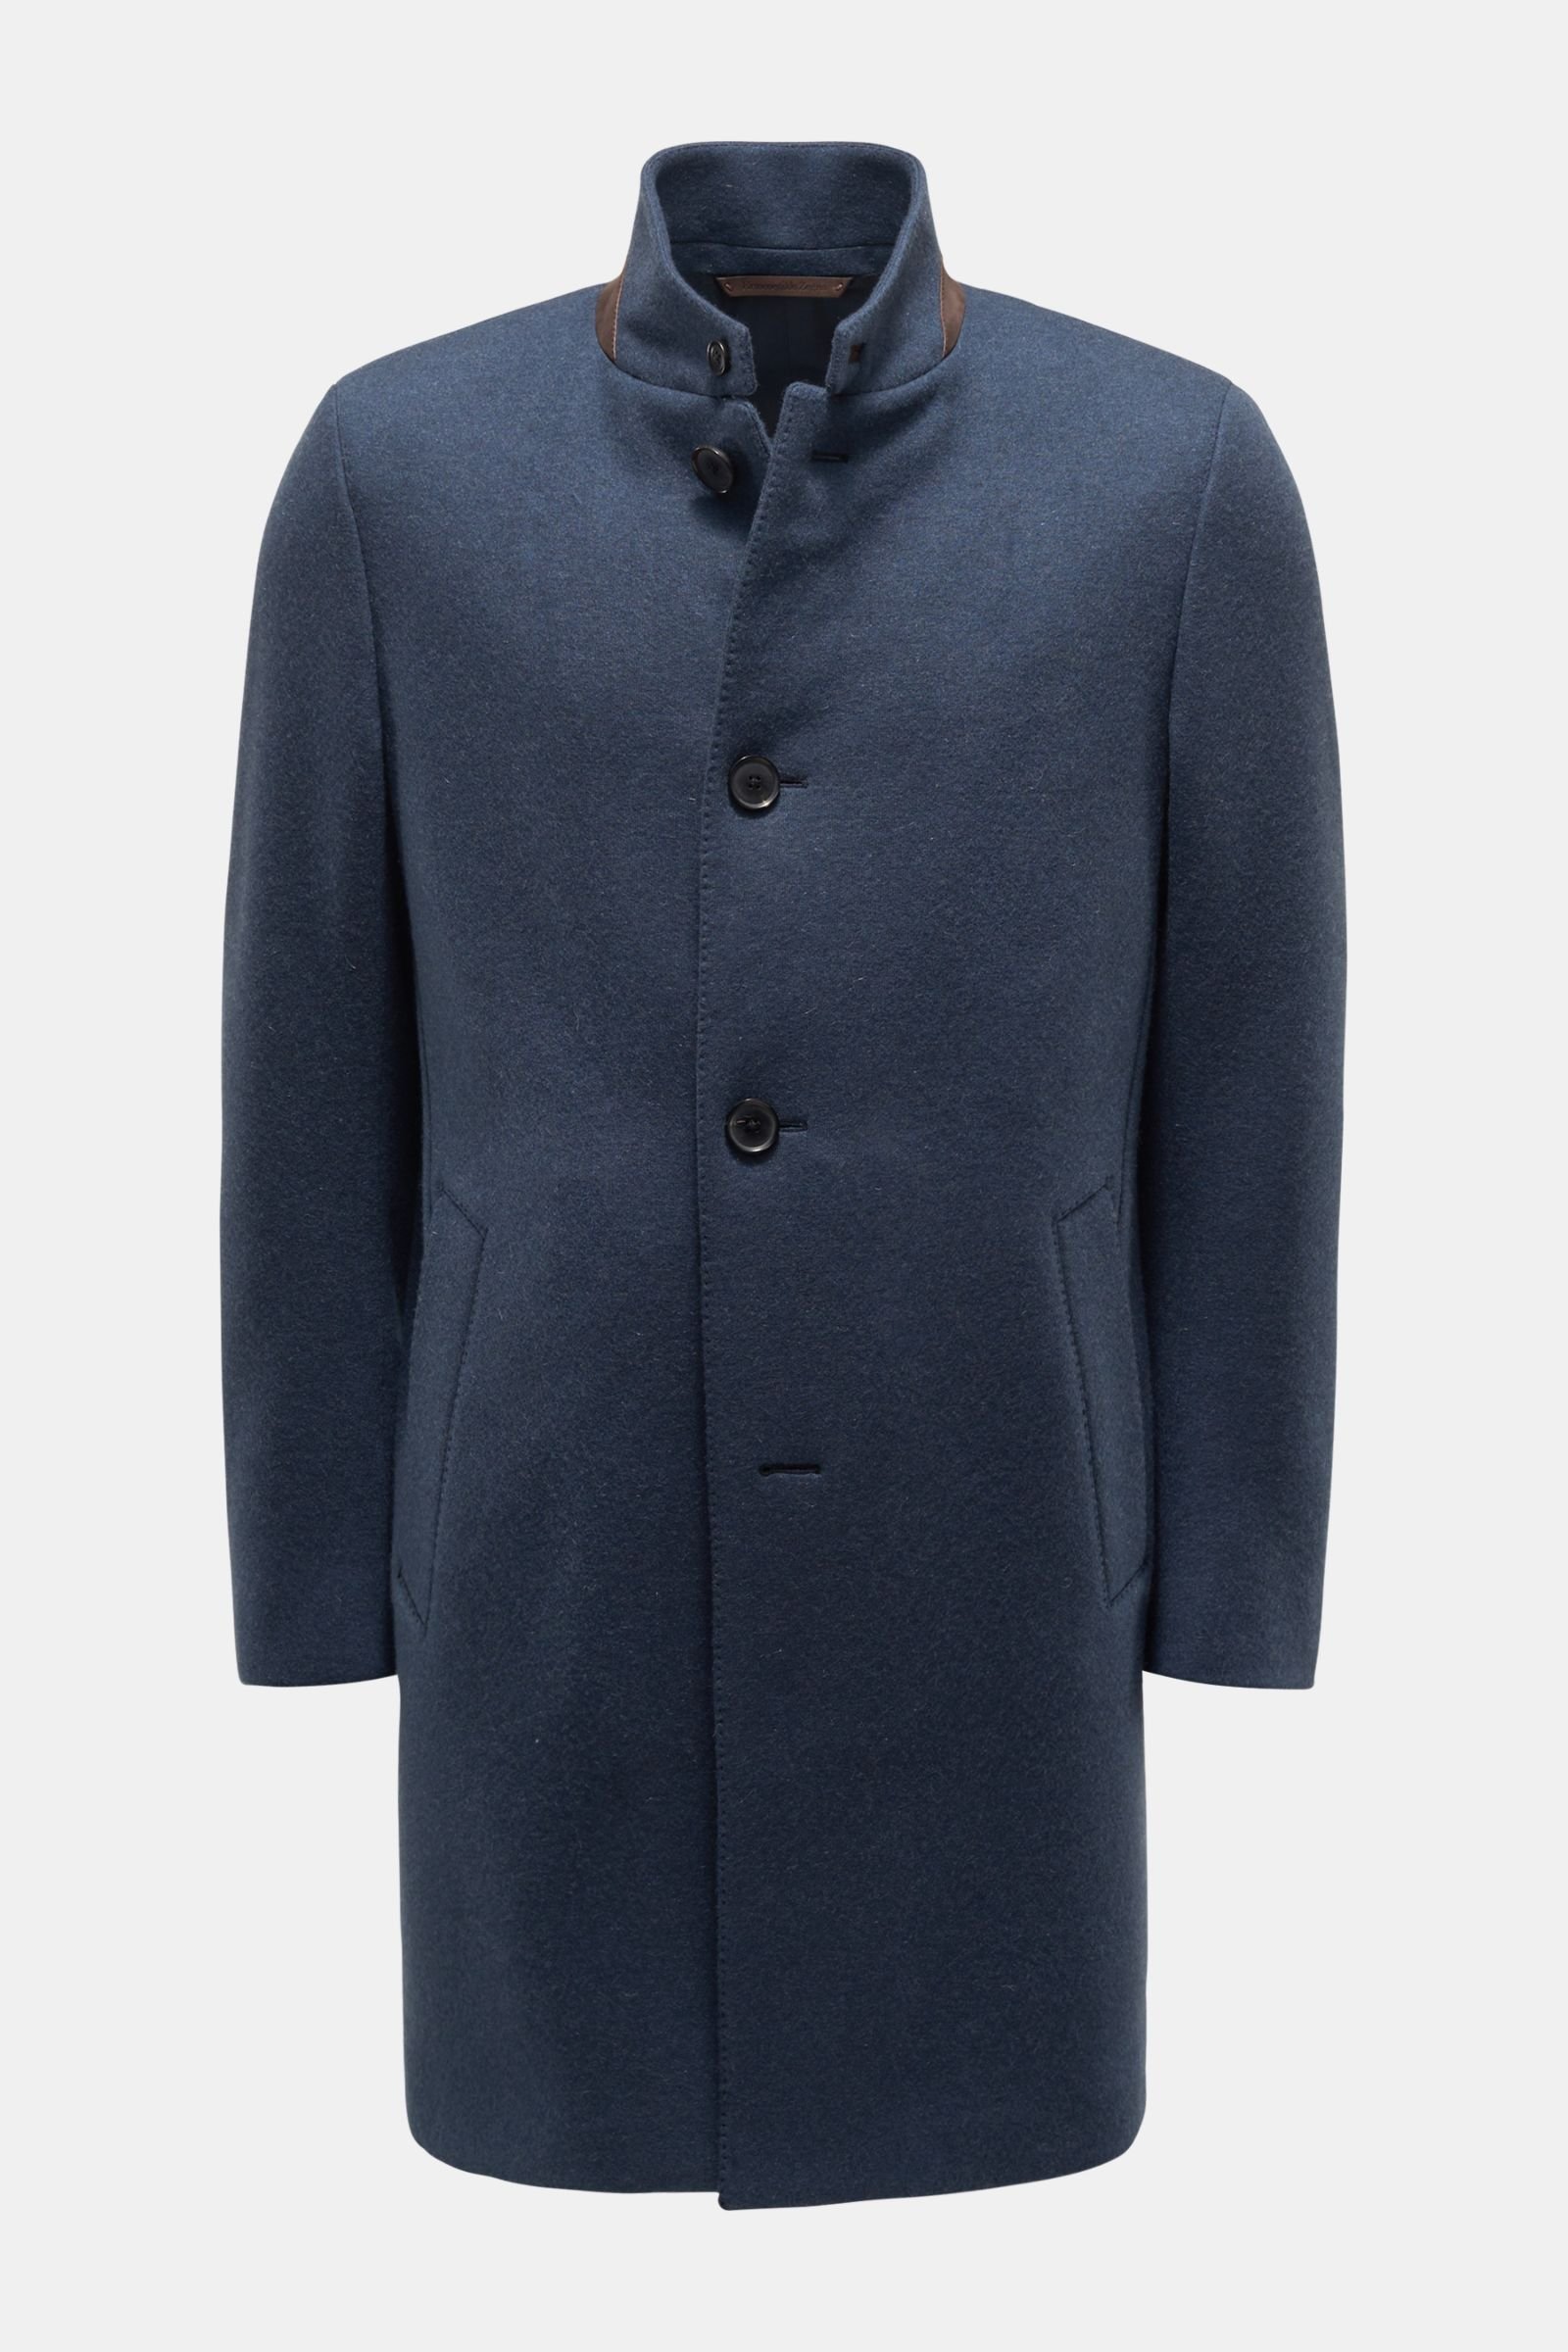 Jersey coat grey-blue